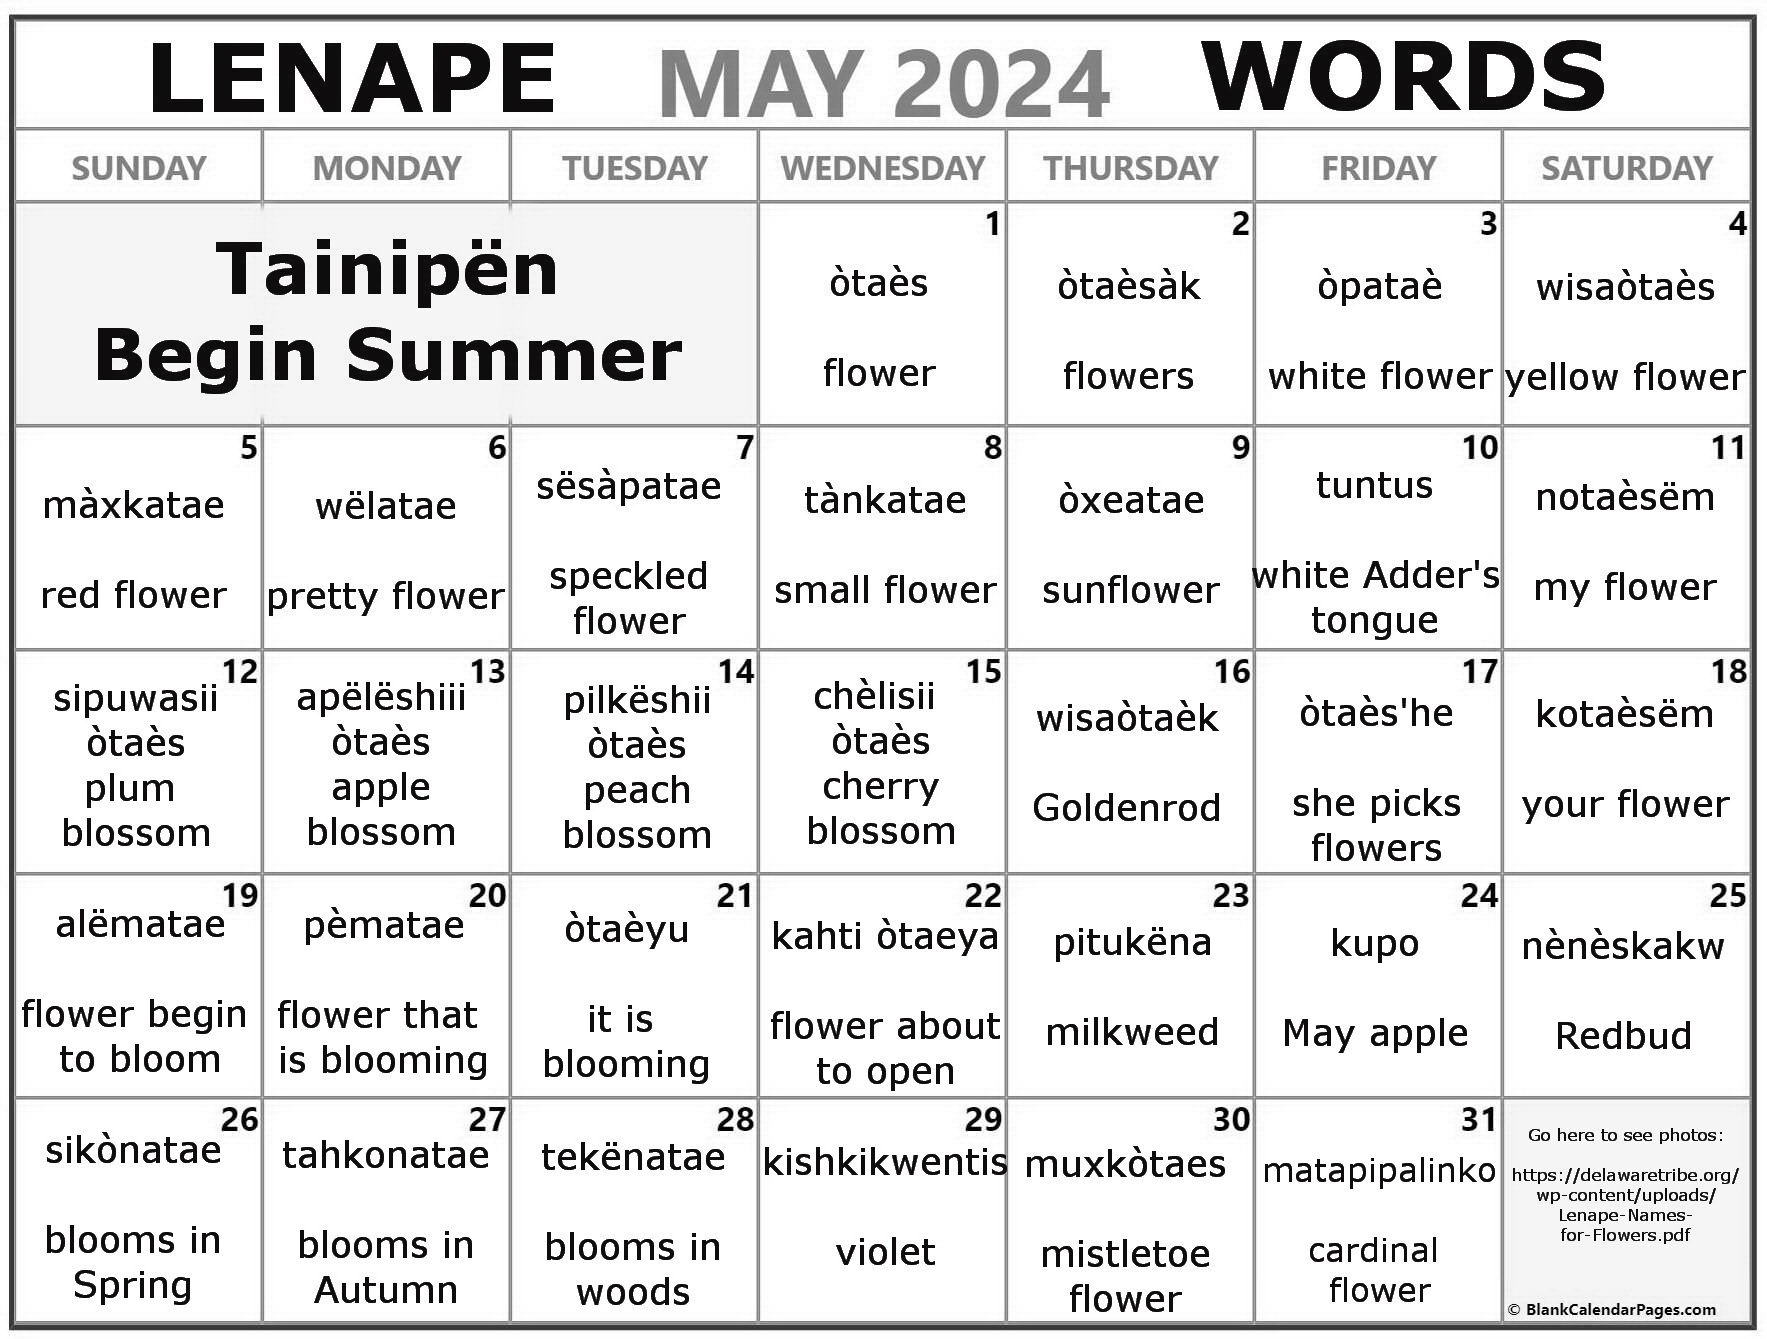 May 2024 Lenape Word-a-Day Calendar